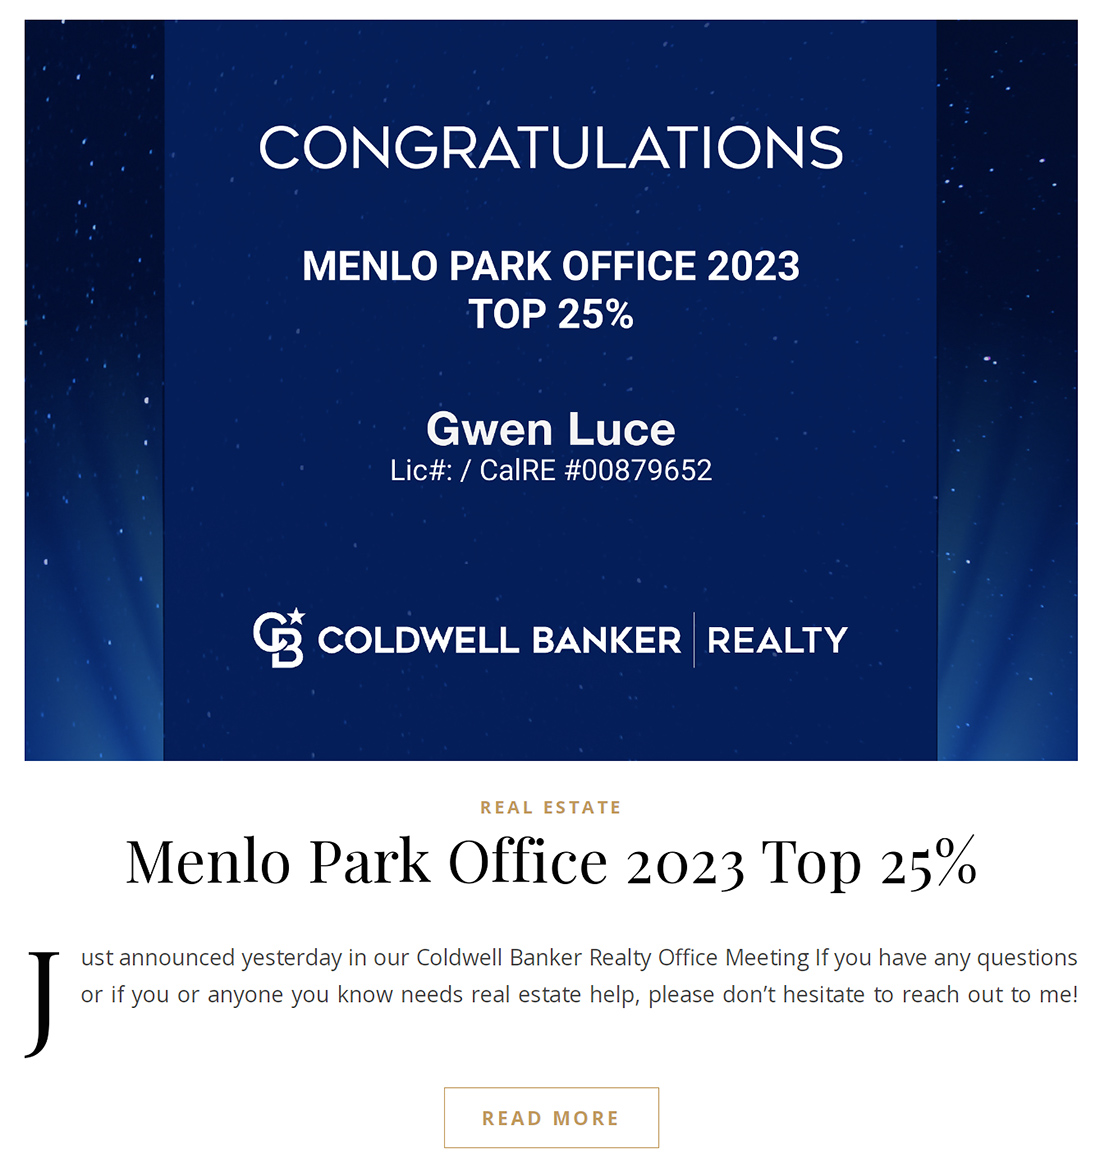 Menlo Park Office 2023 Top 25%